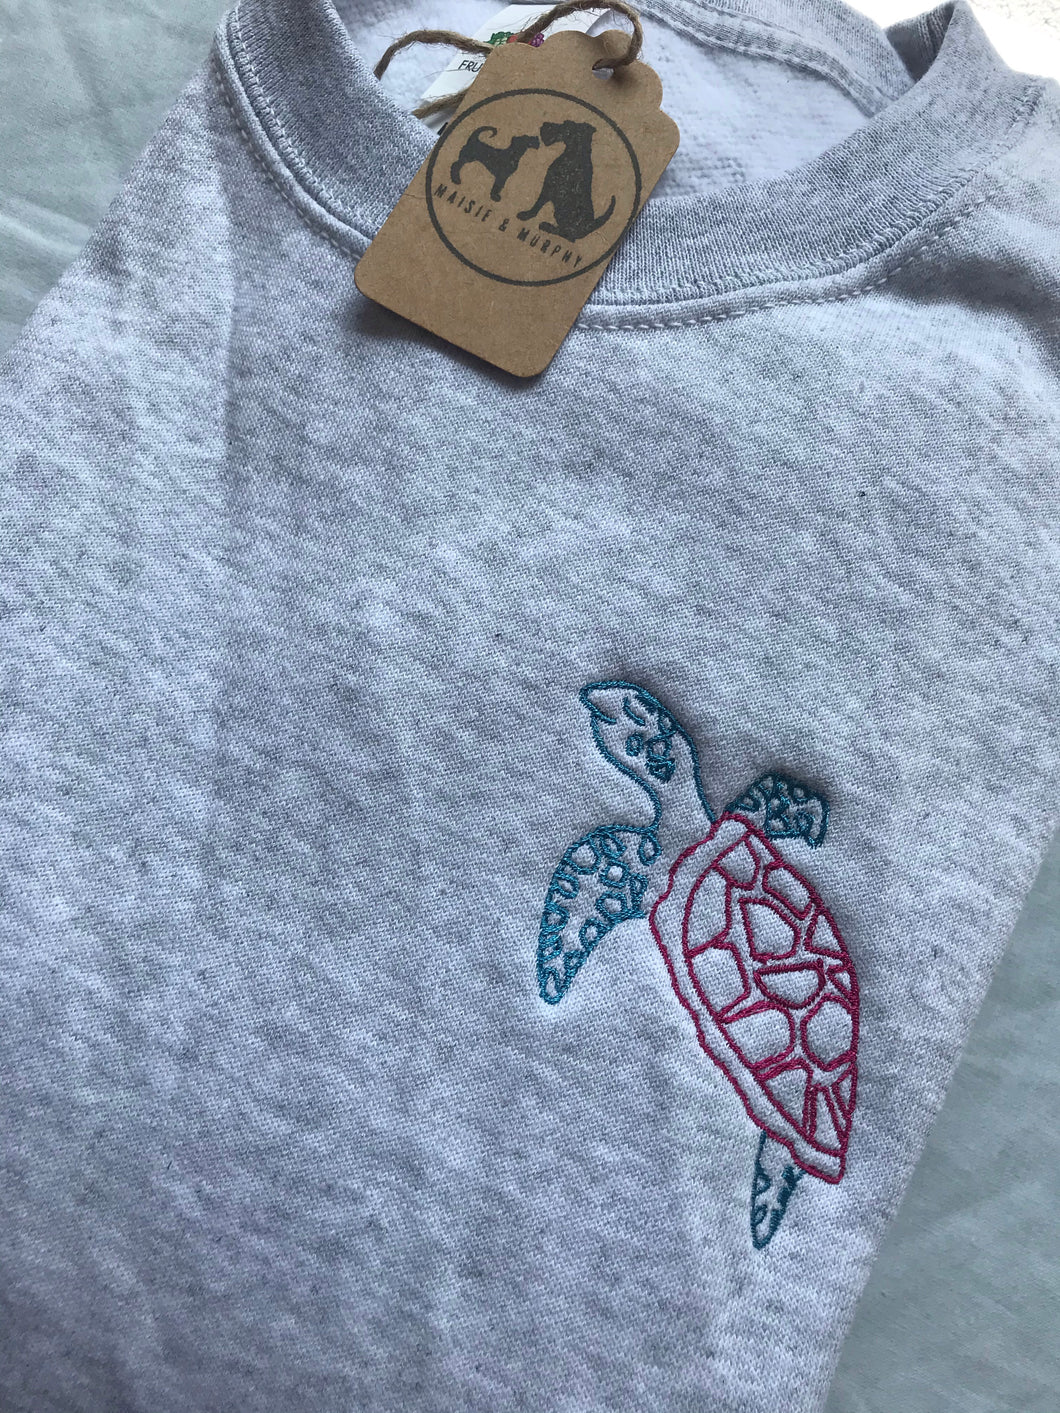 Colourful Sea Turtle Sweatshirt- Gifts for marine/ sea life lovers